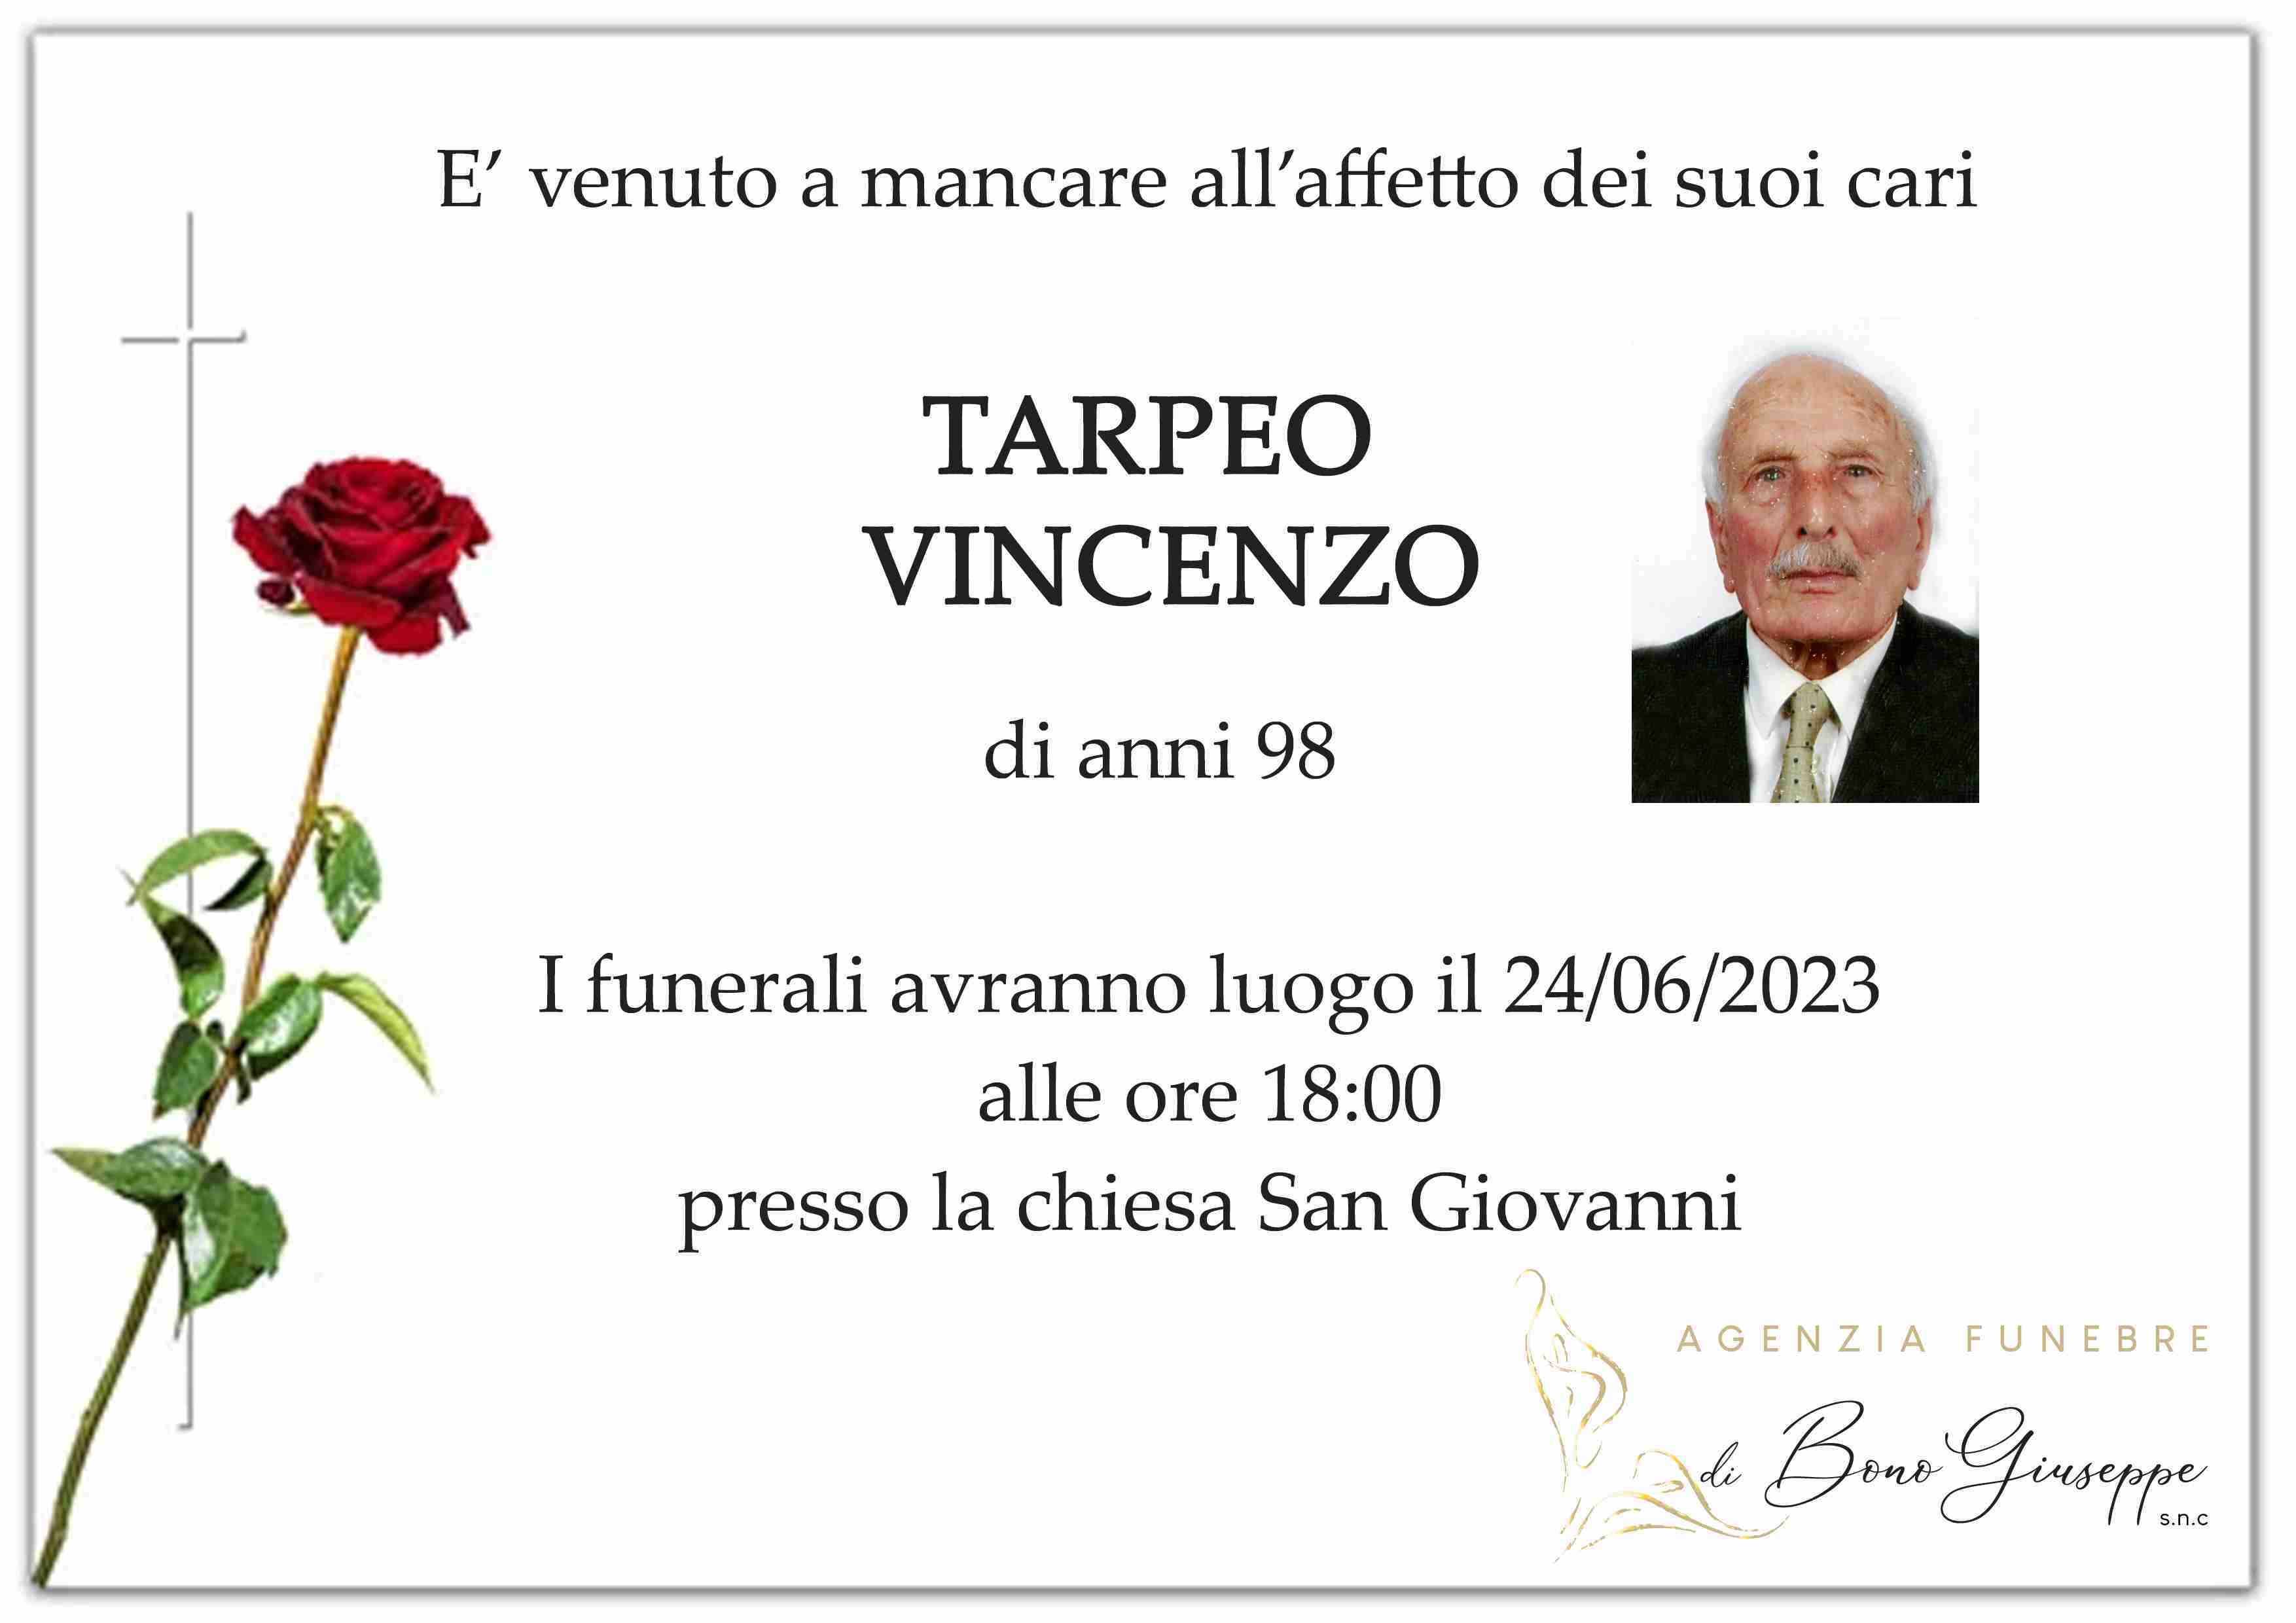 Vincenzo Tarpeo